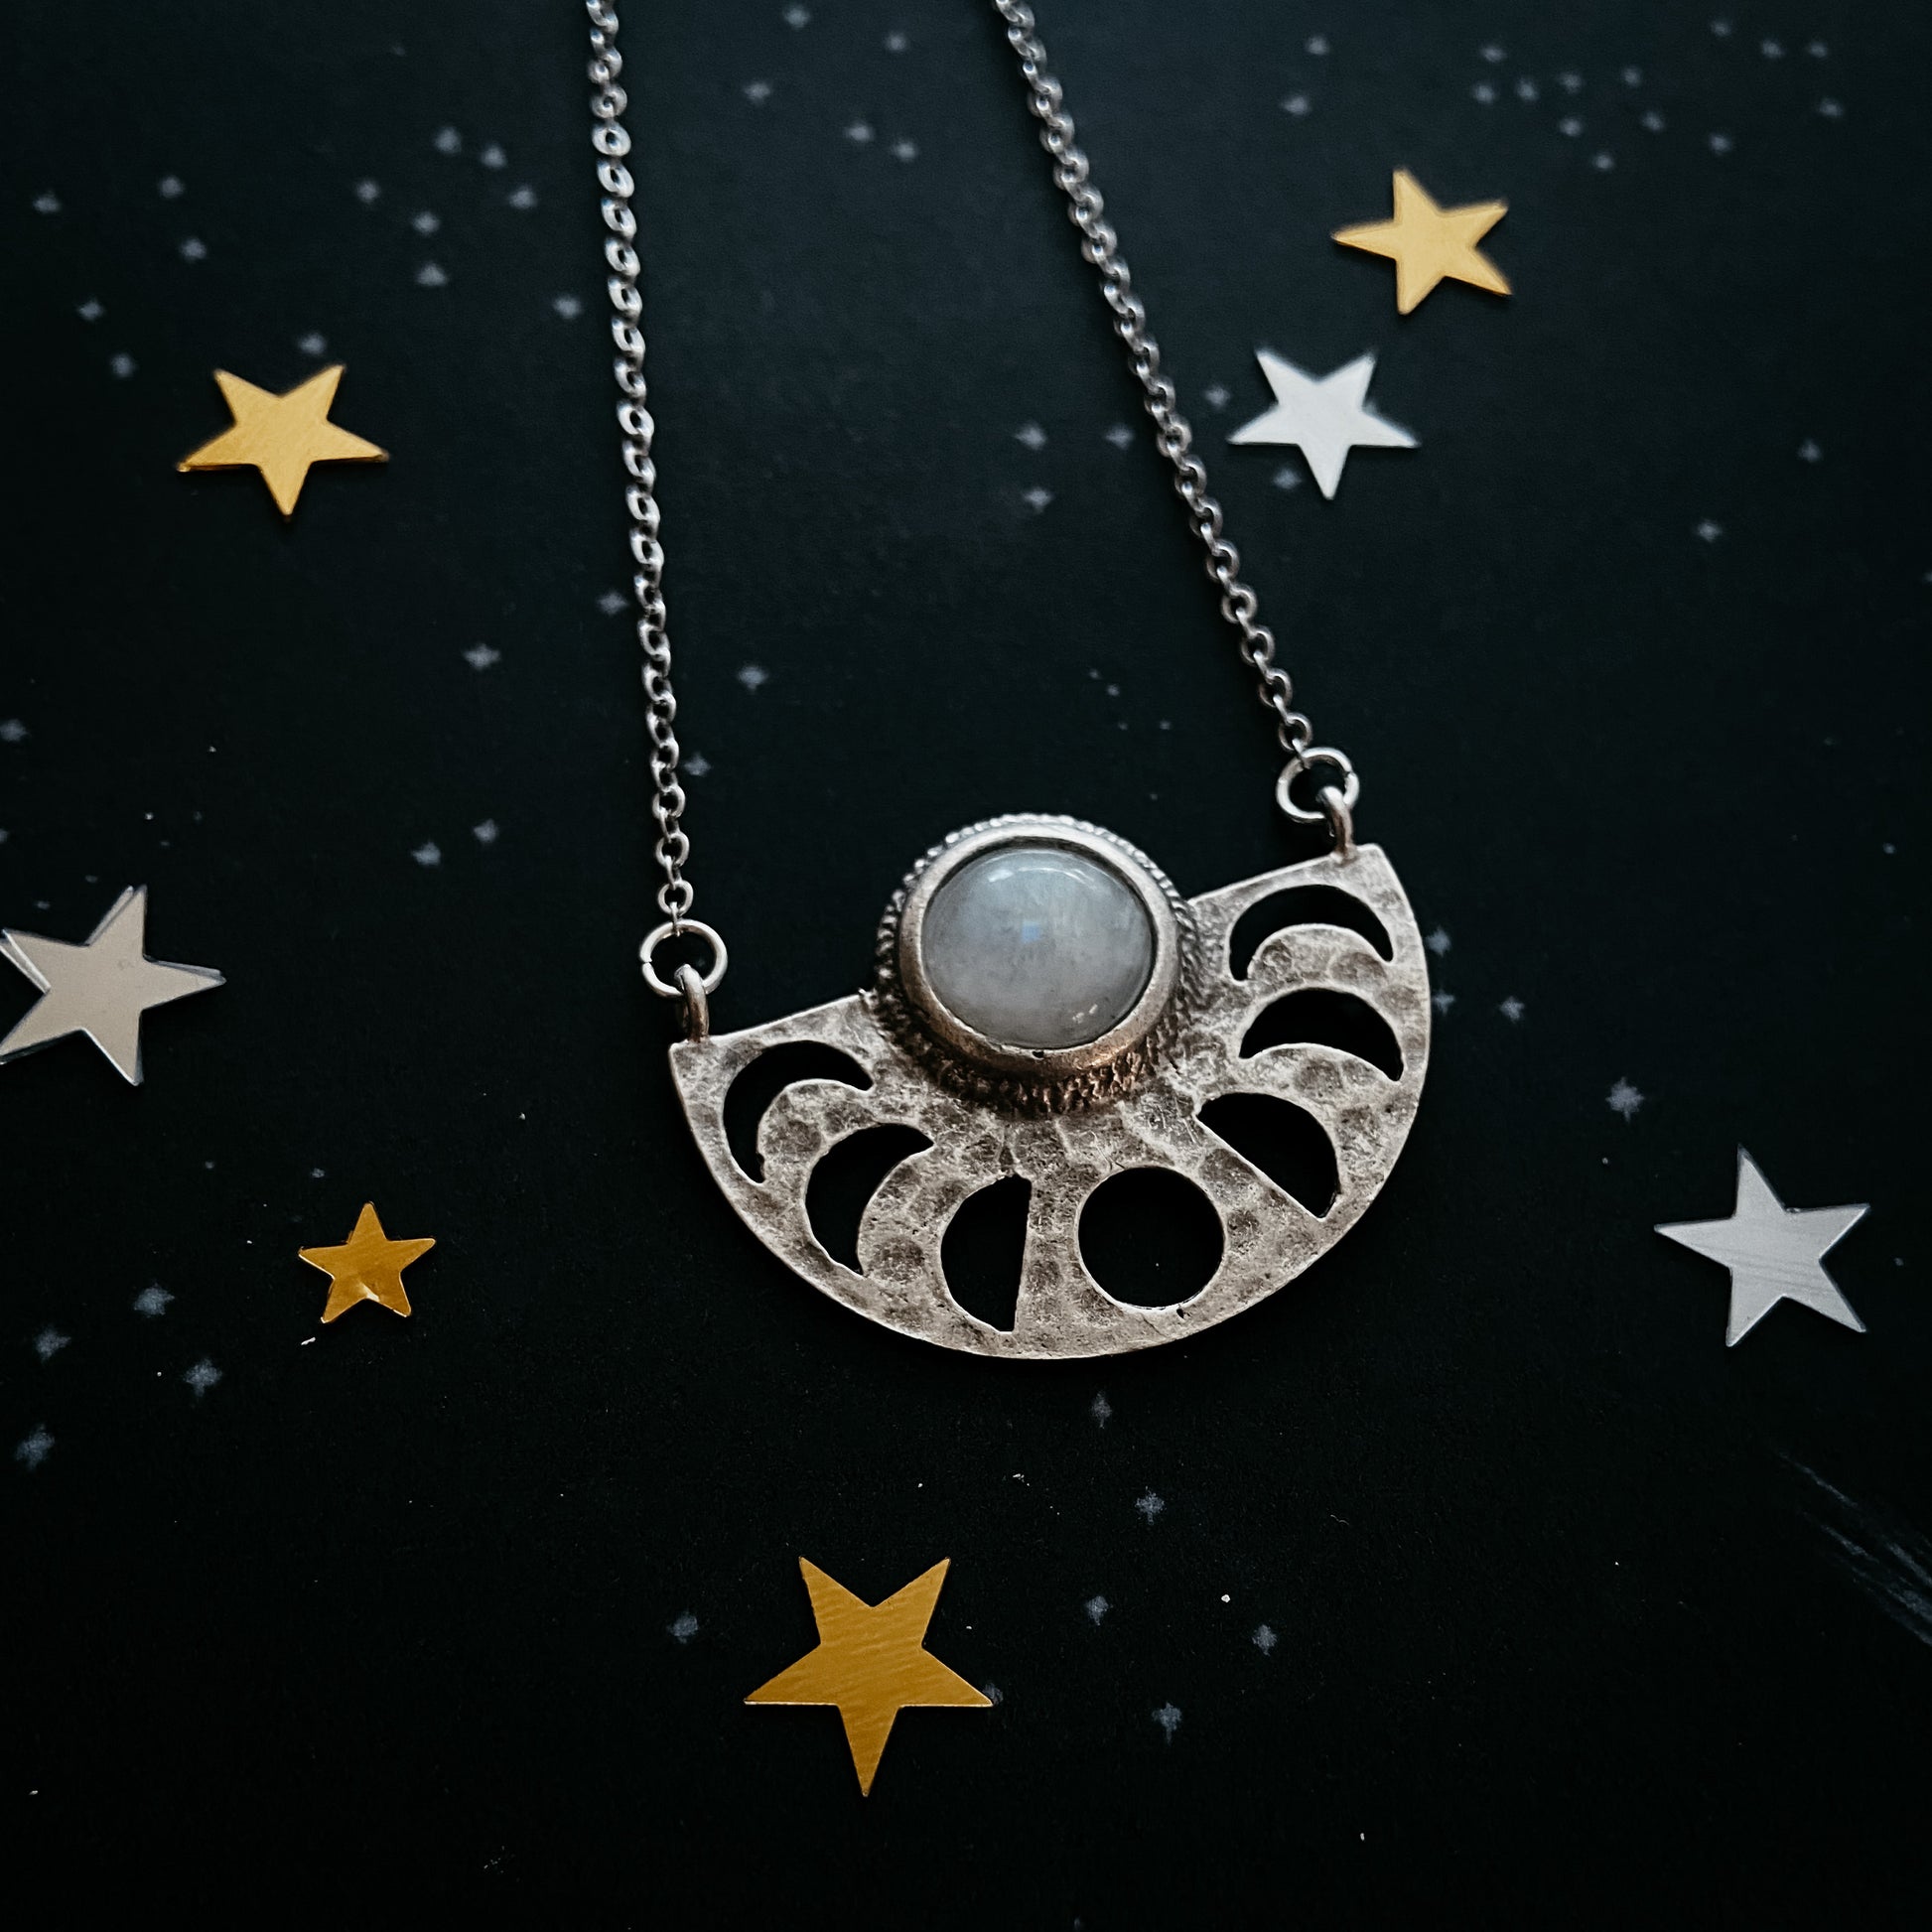 Moon Goddess Necklace - Moon Phases Rainbow Moonstone Pendant Necklace Yugen Handmade   